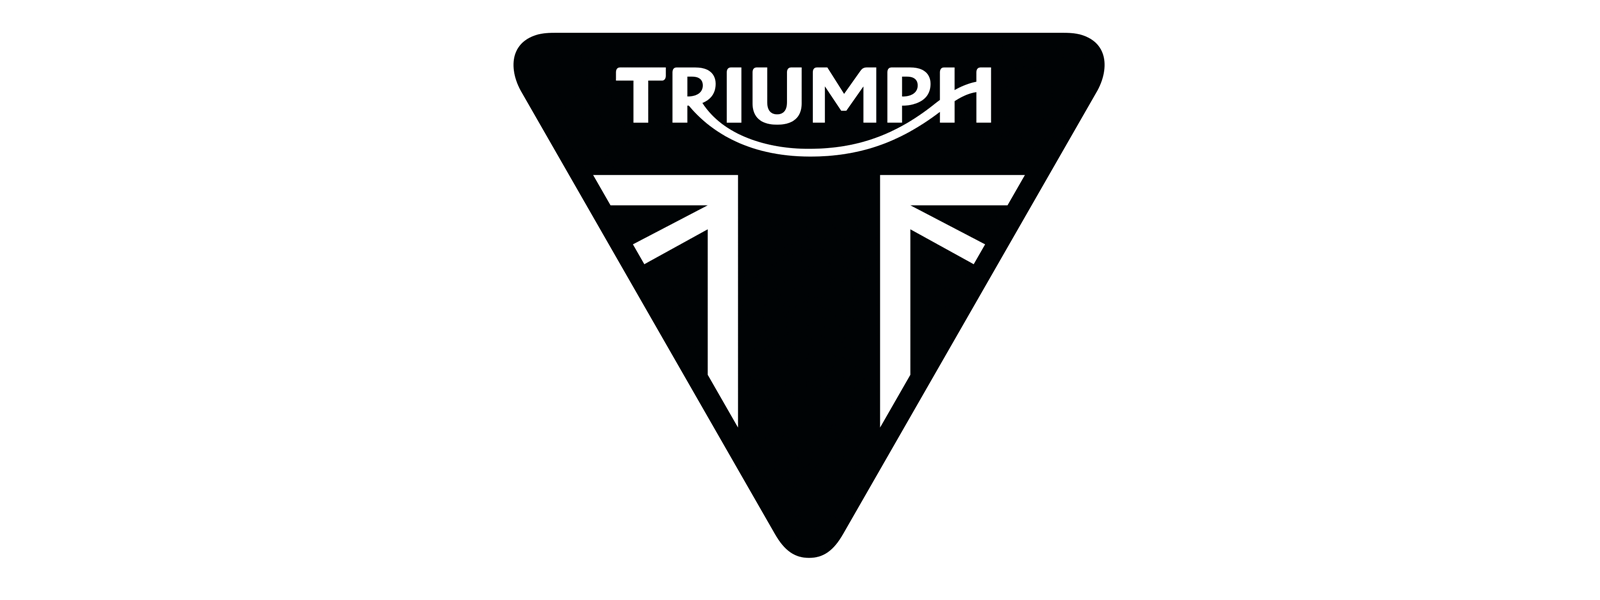 Triumph Triangle Logo - Triumph logo. Motorcycle brands: logo, specs, history